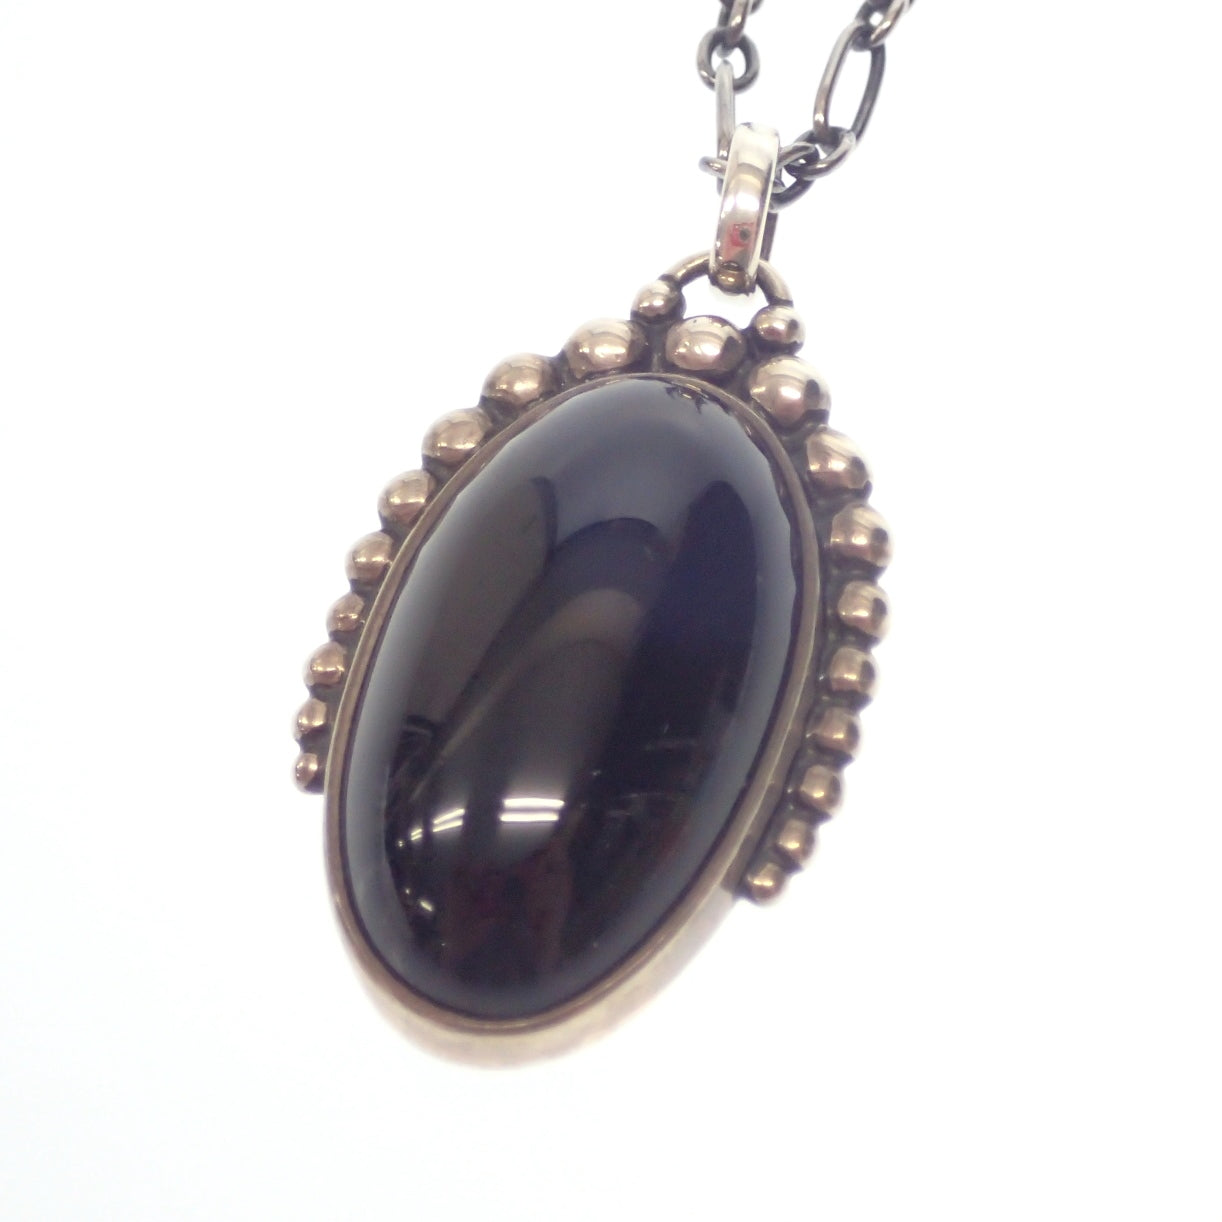 Good condition ◆ Georg Jensen necklace pendant colored stone 925S 9B onyx black x silver GEORG JENSEN [AFI10] 